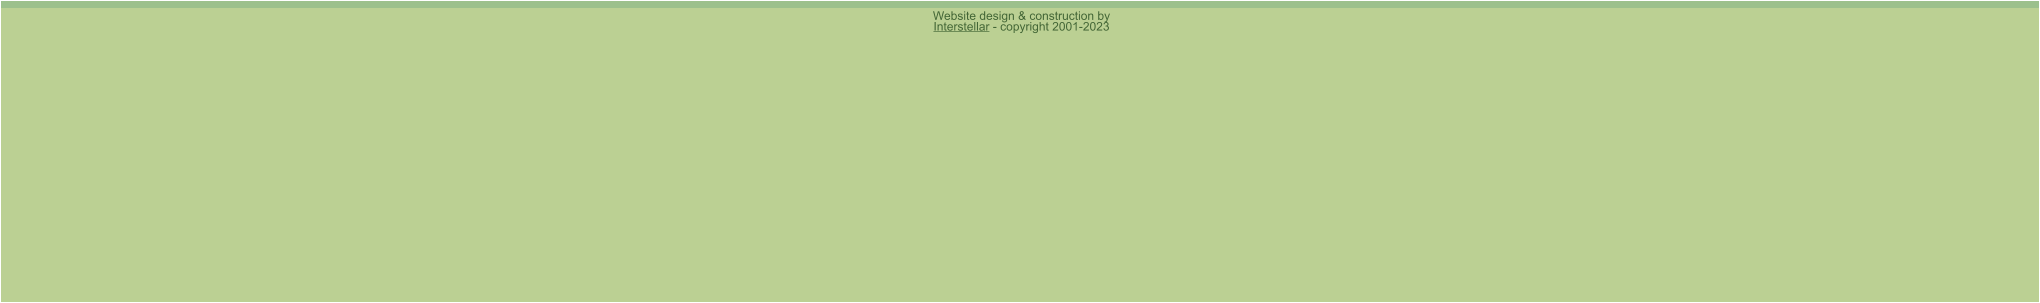 Website design & construction by Interstellar - copyright 2001-2023